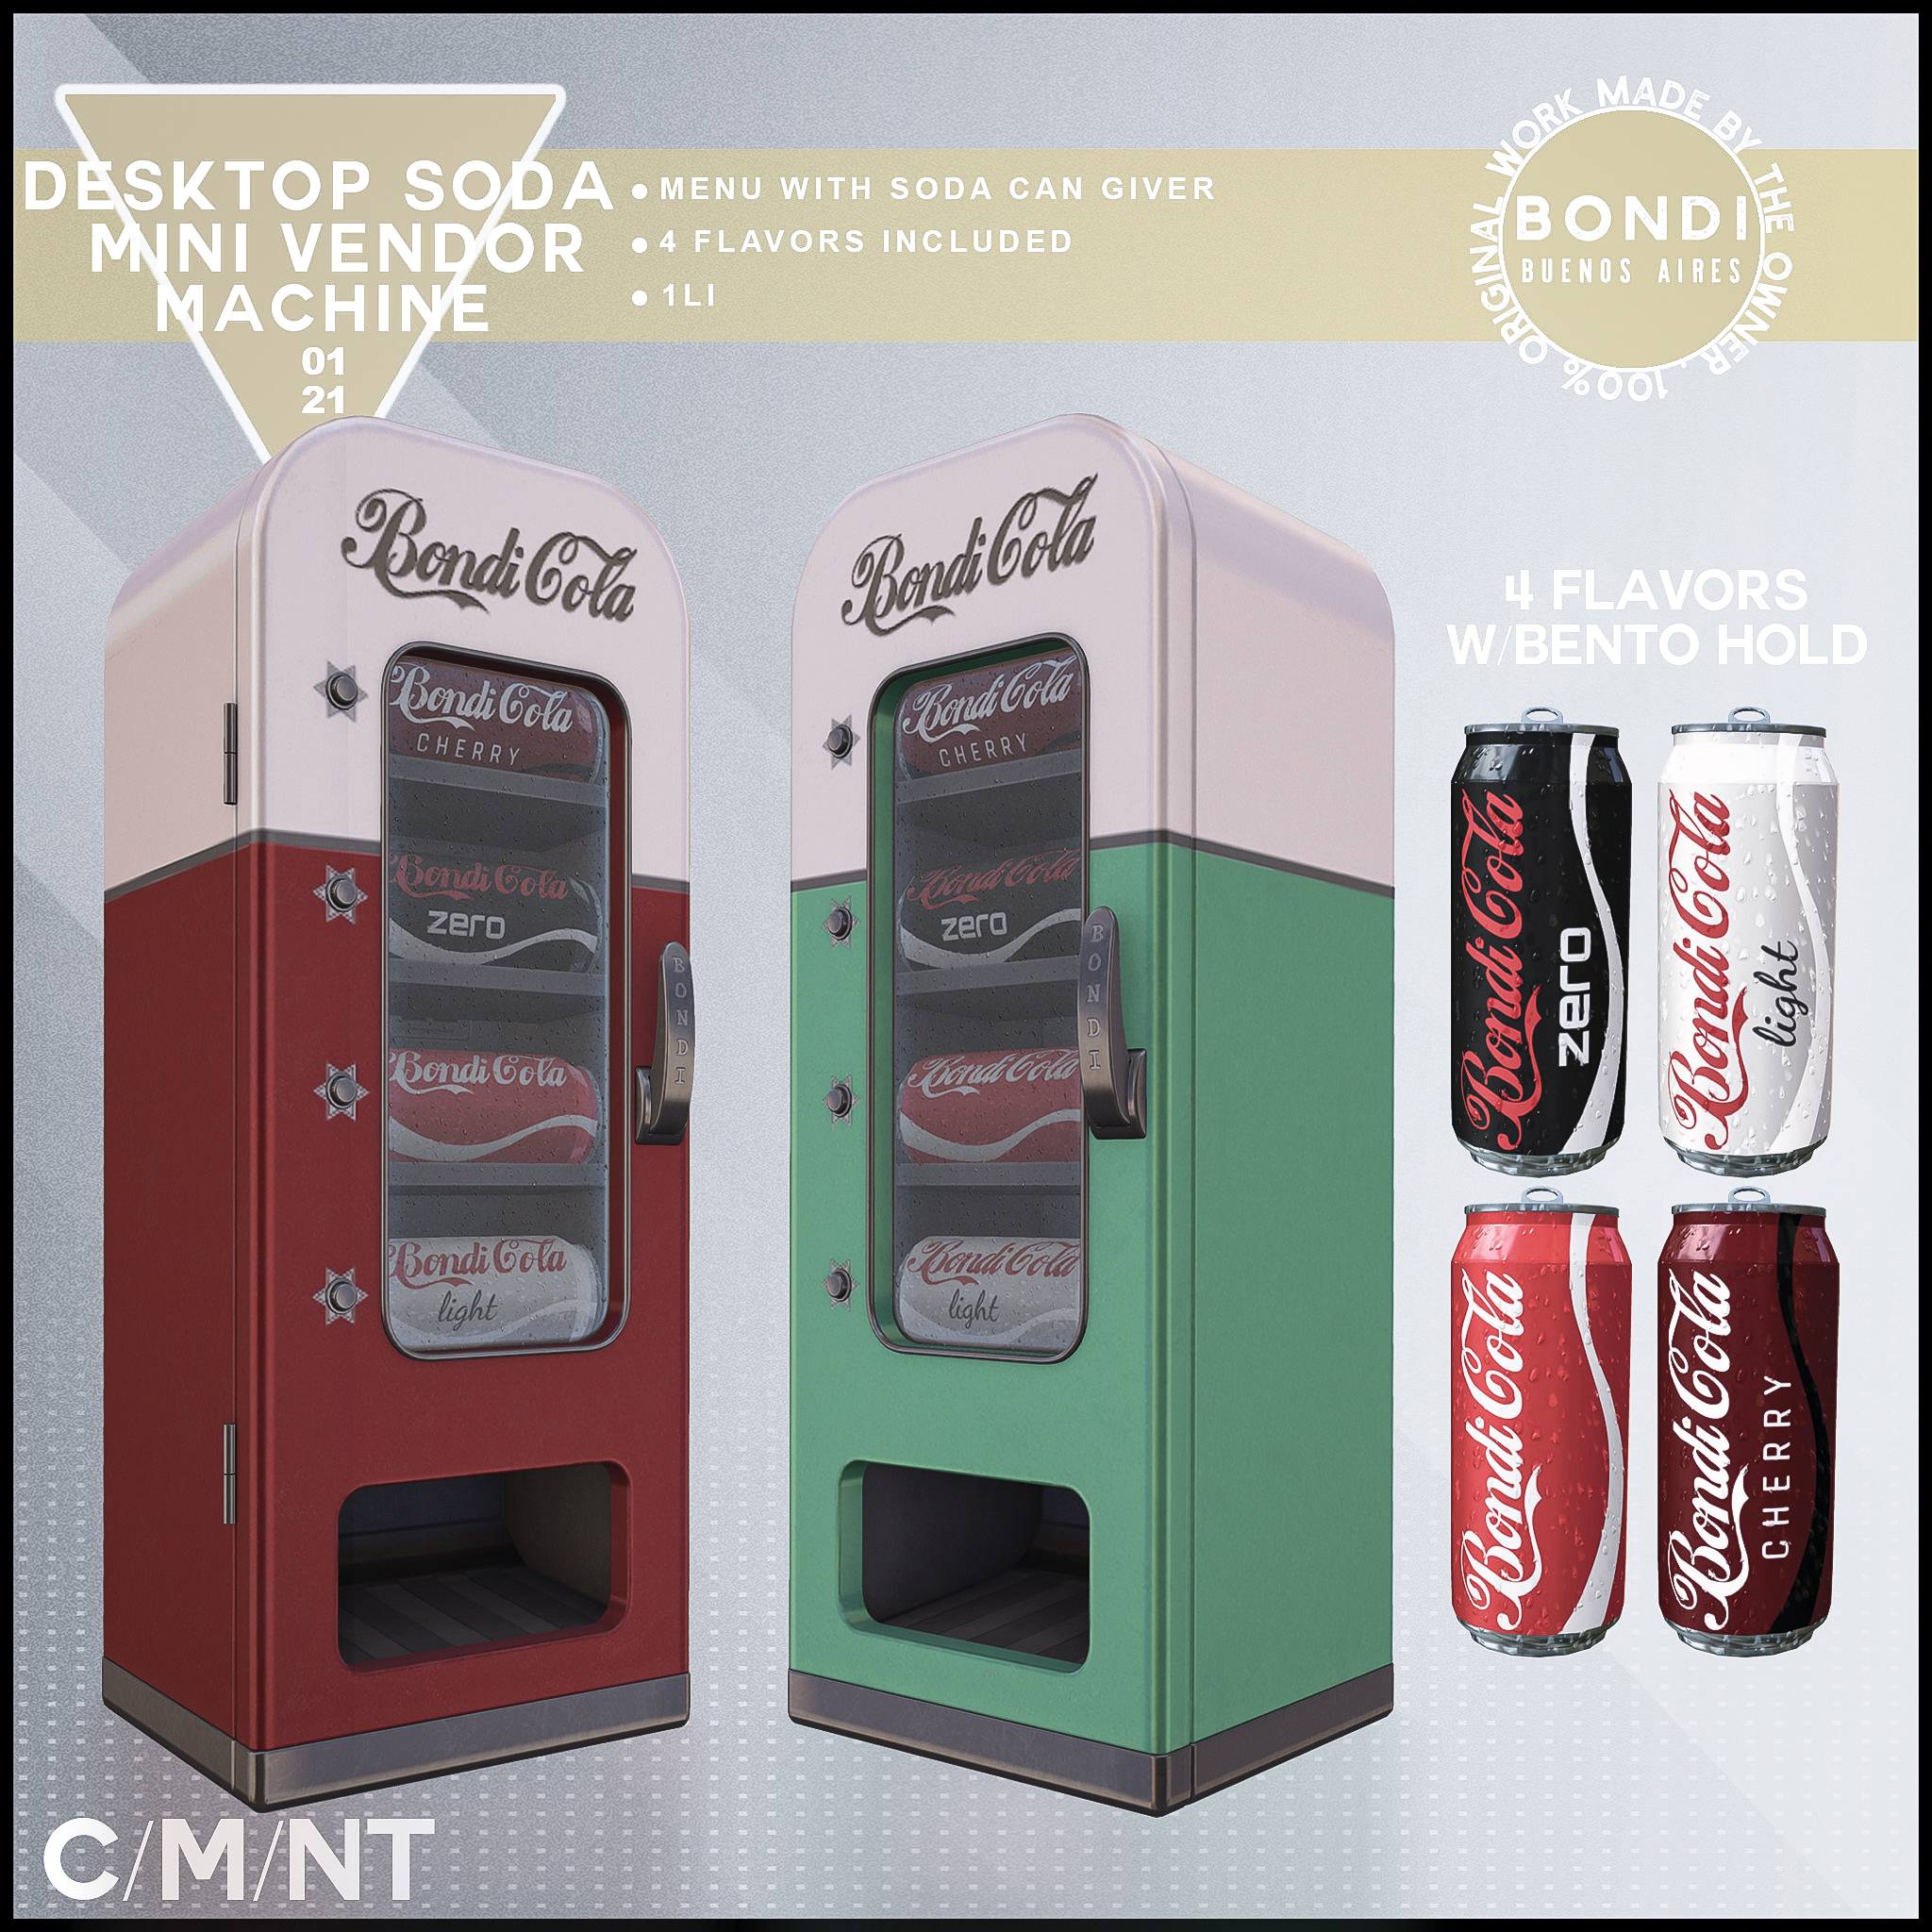 Bondi – Desktop Soda Mini Vendor Machine